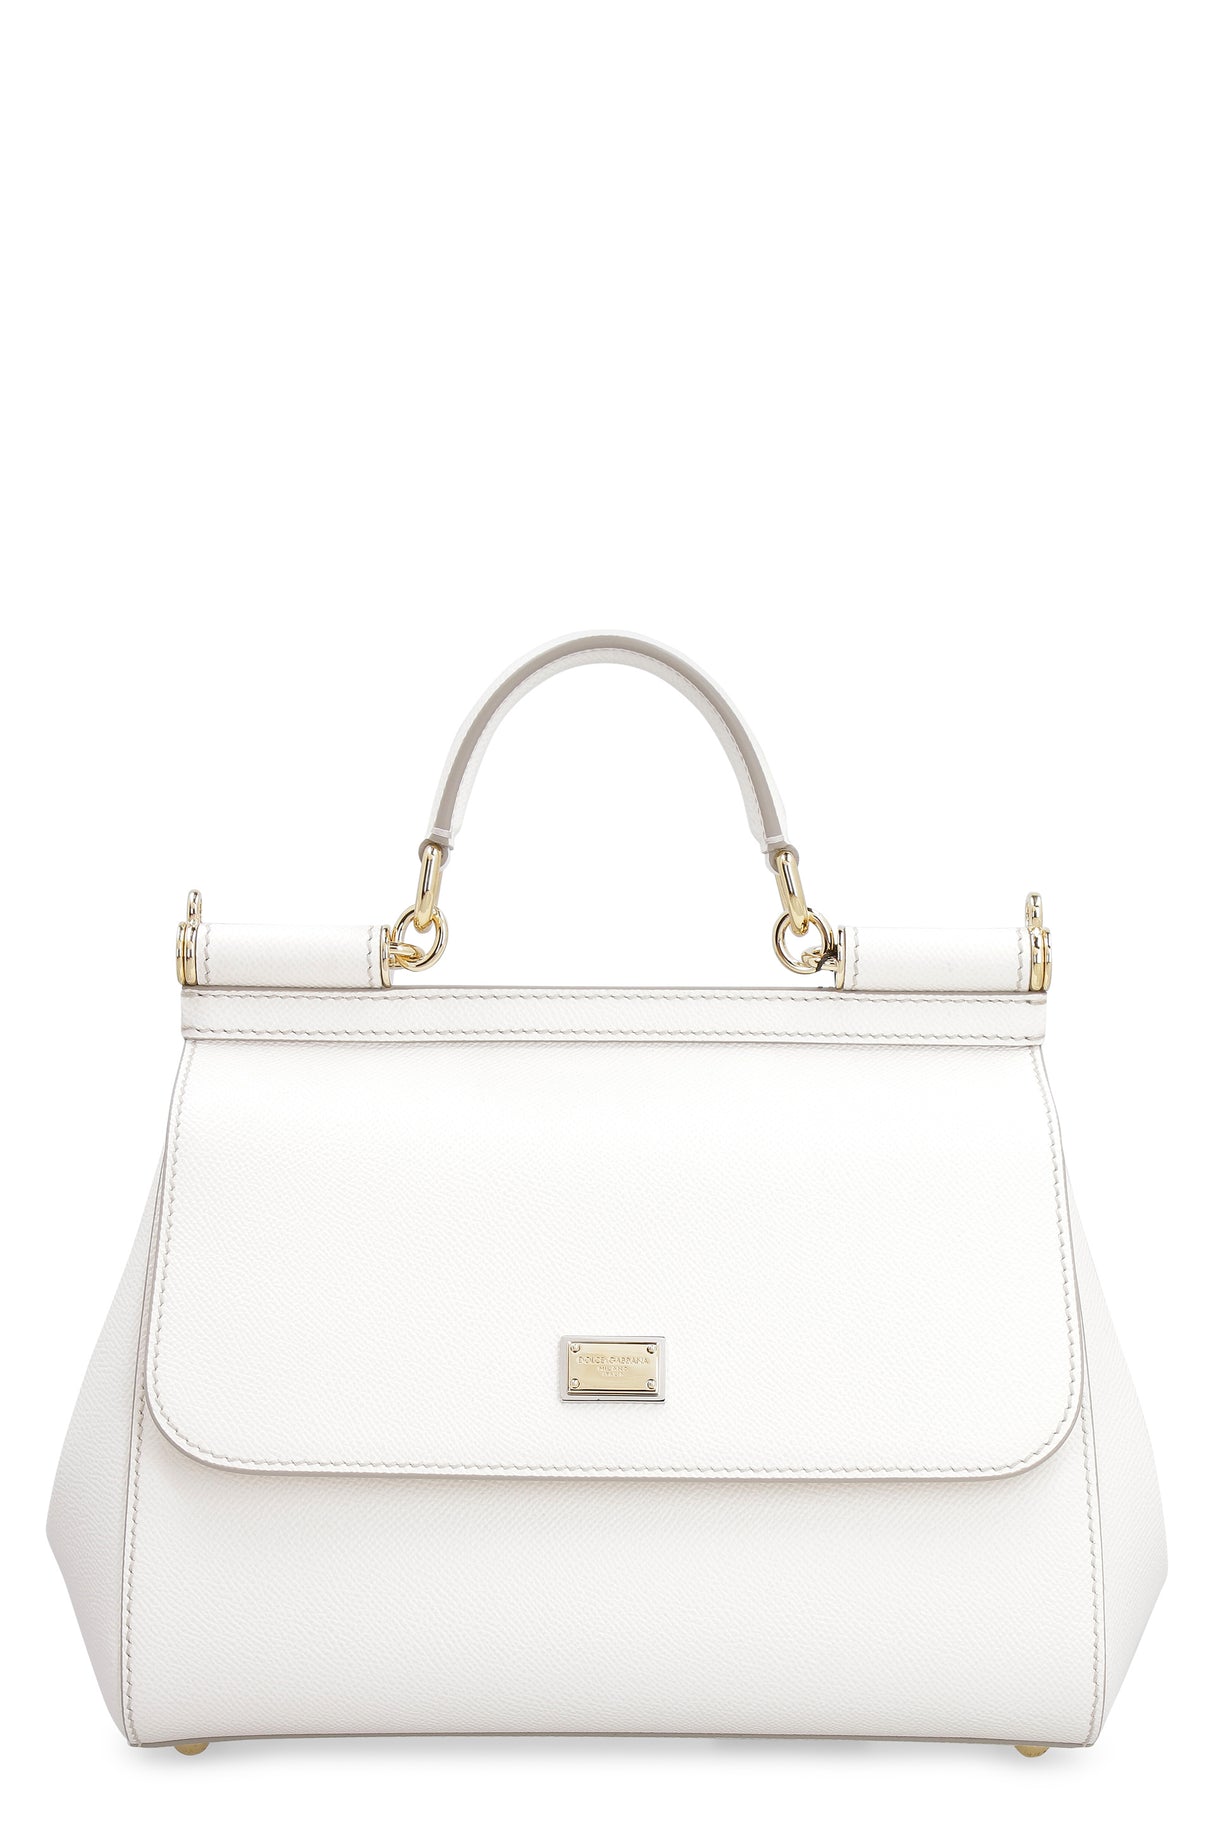 Sicily Medium Handbag in White Calf Leather for Women （西西里中号白牛皮手提包女用）